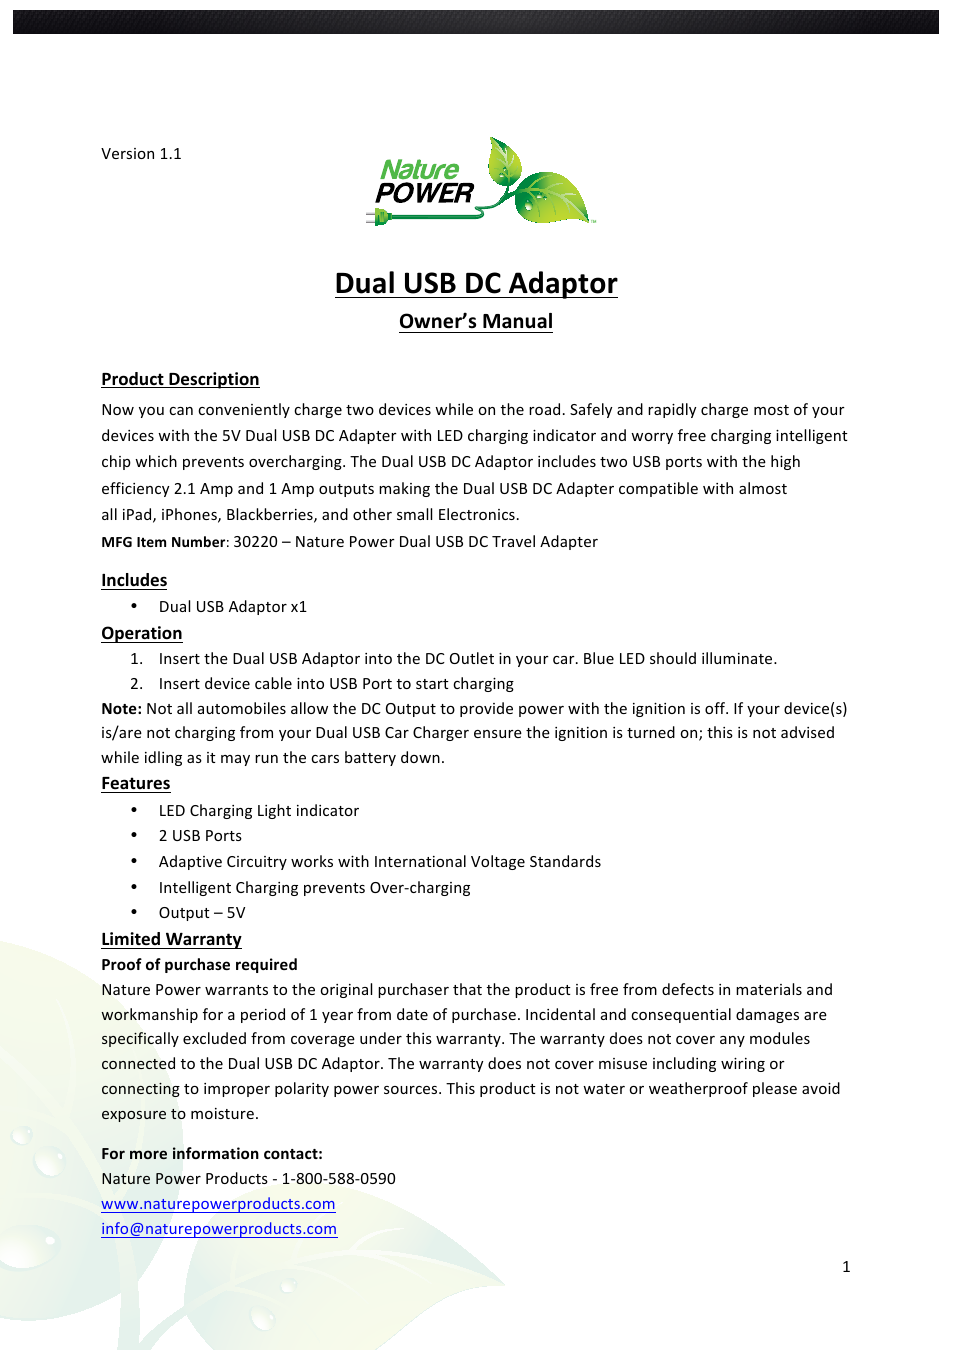 Dual USB DC Adaptor (30220)